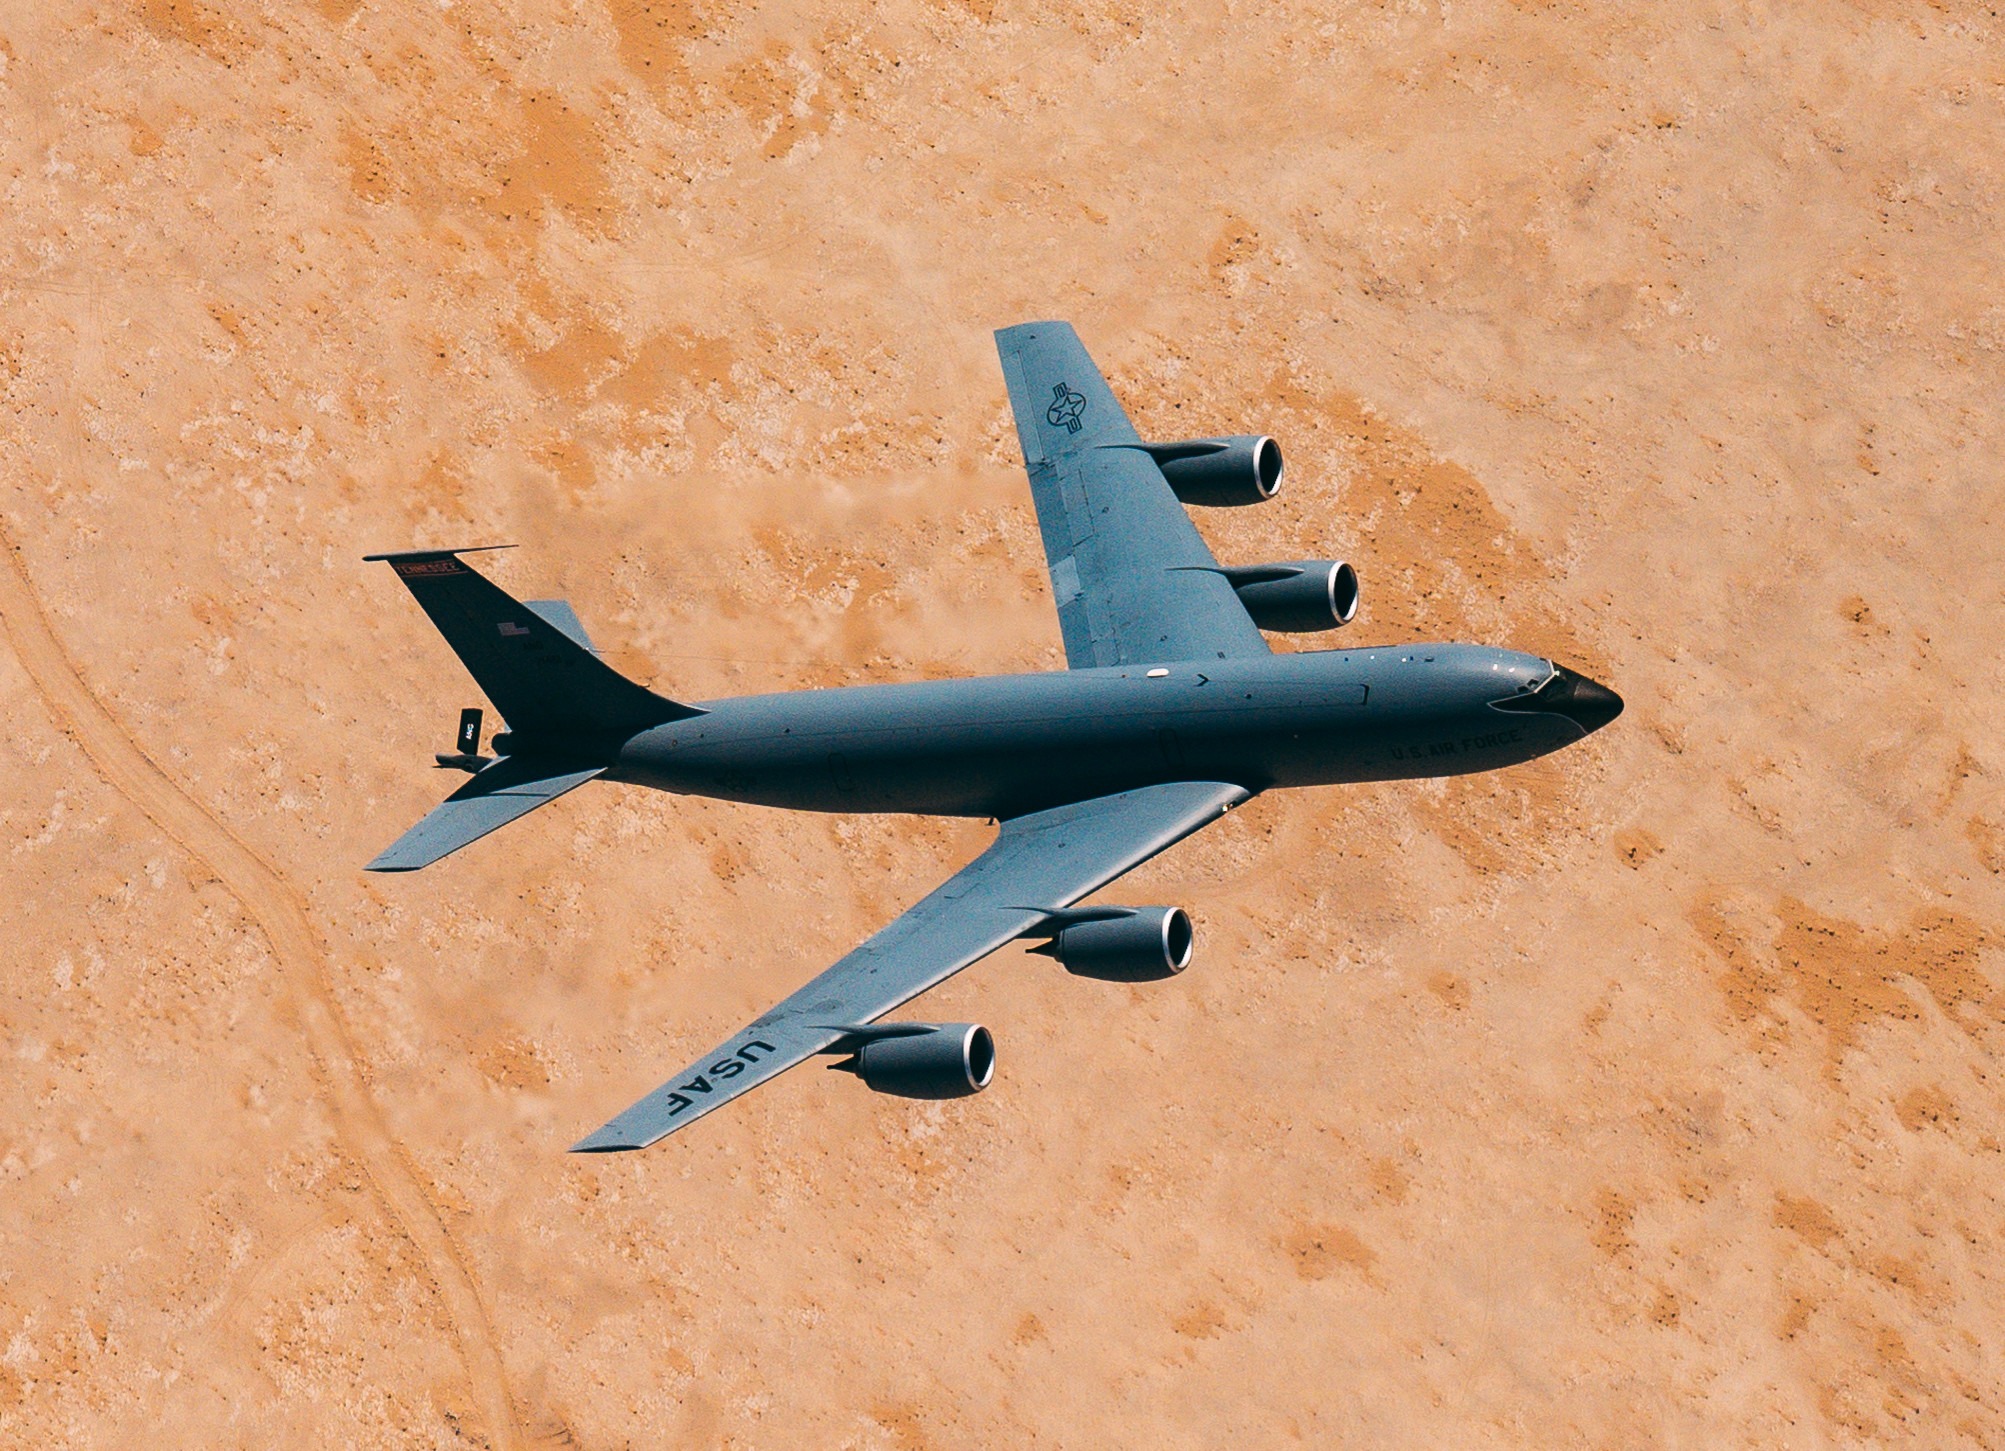 KC-135 Stratotanker aircraft